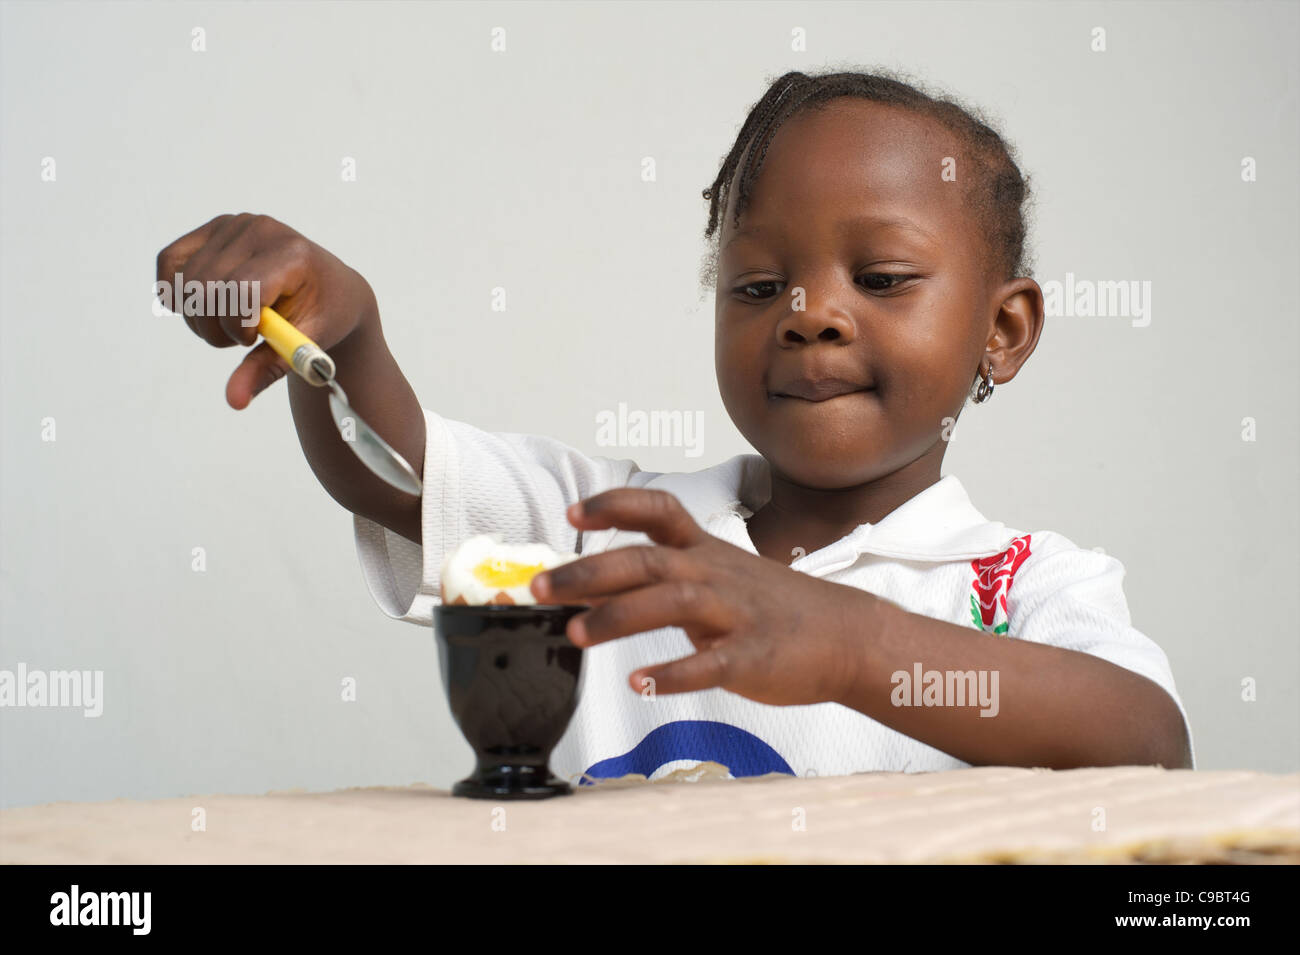 Young Kenyan girl eating boiled egg, Nairobi, Kenya Stock Photo